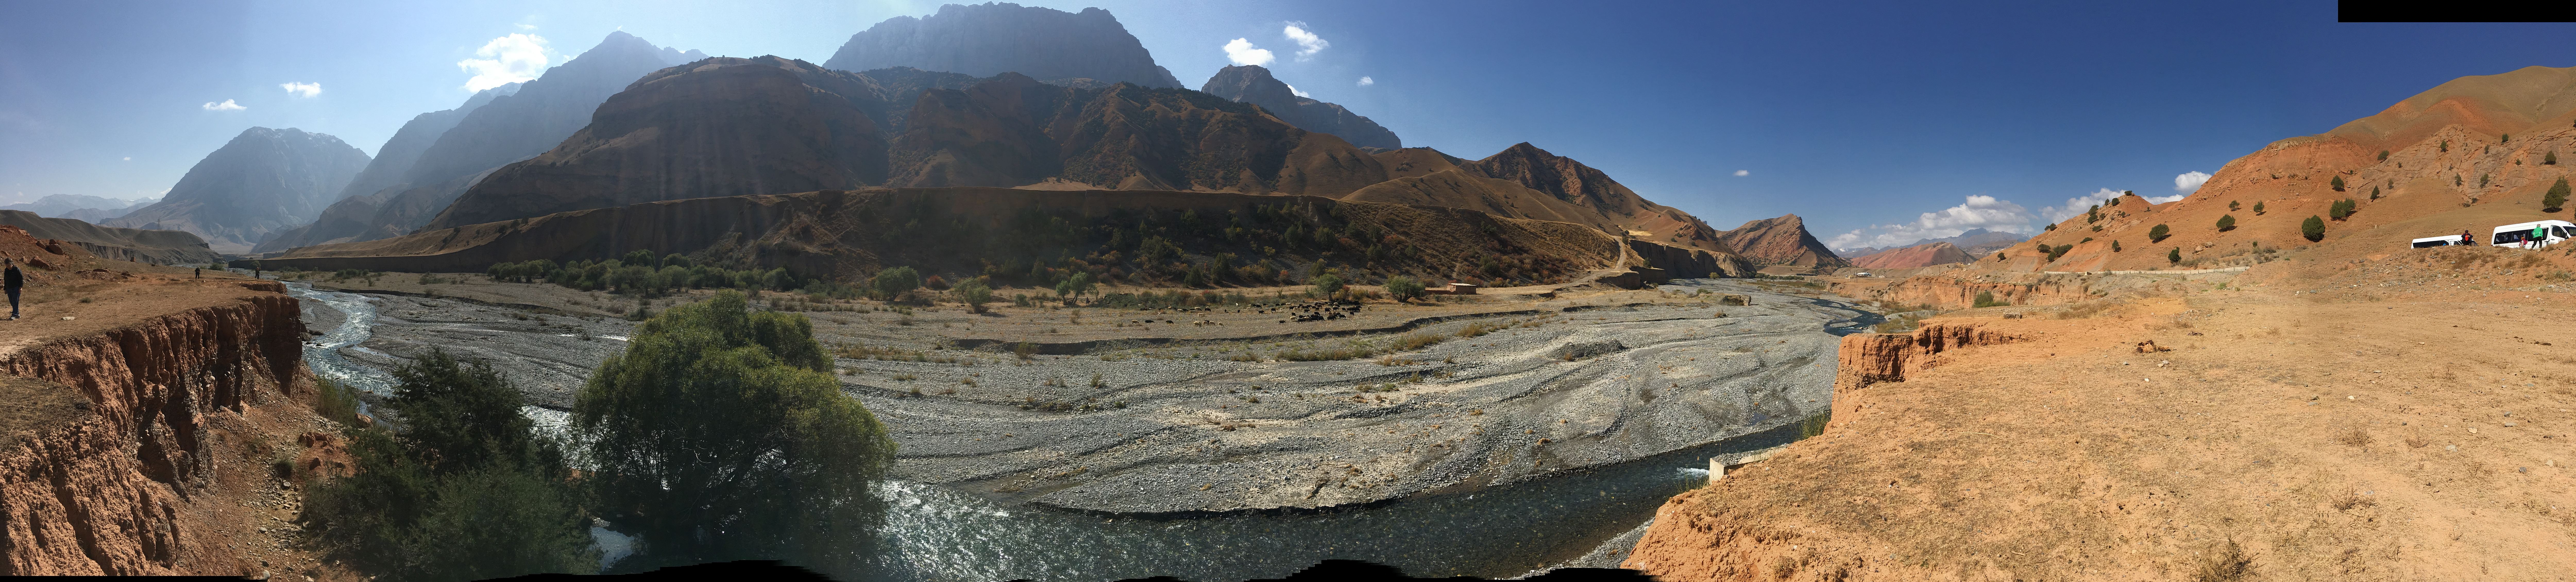 Amazing scenery on our Kyrgyzstan tour